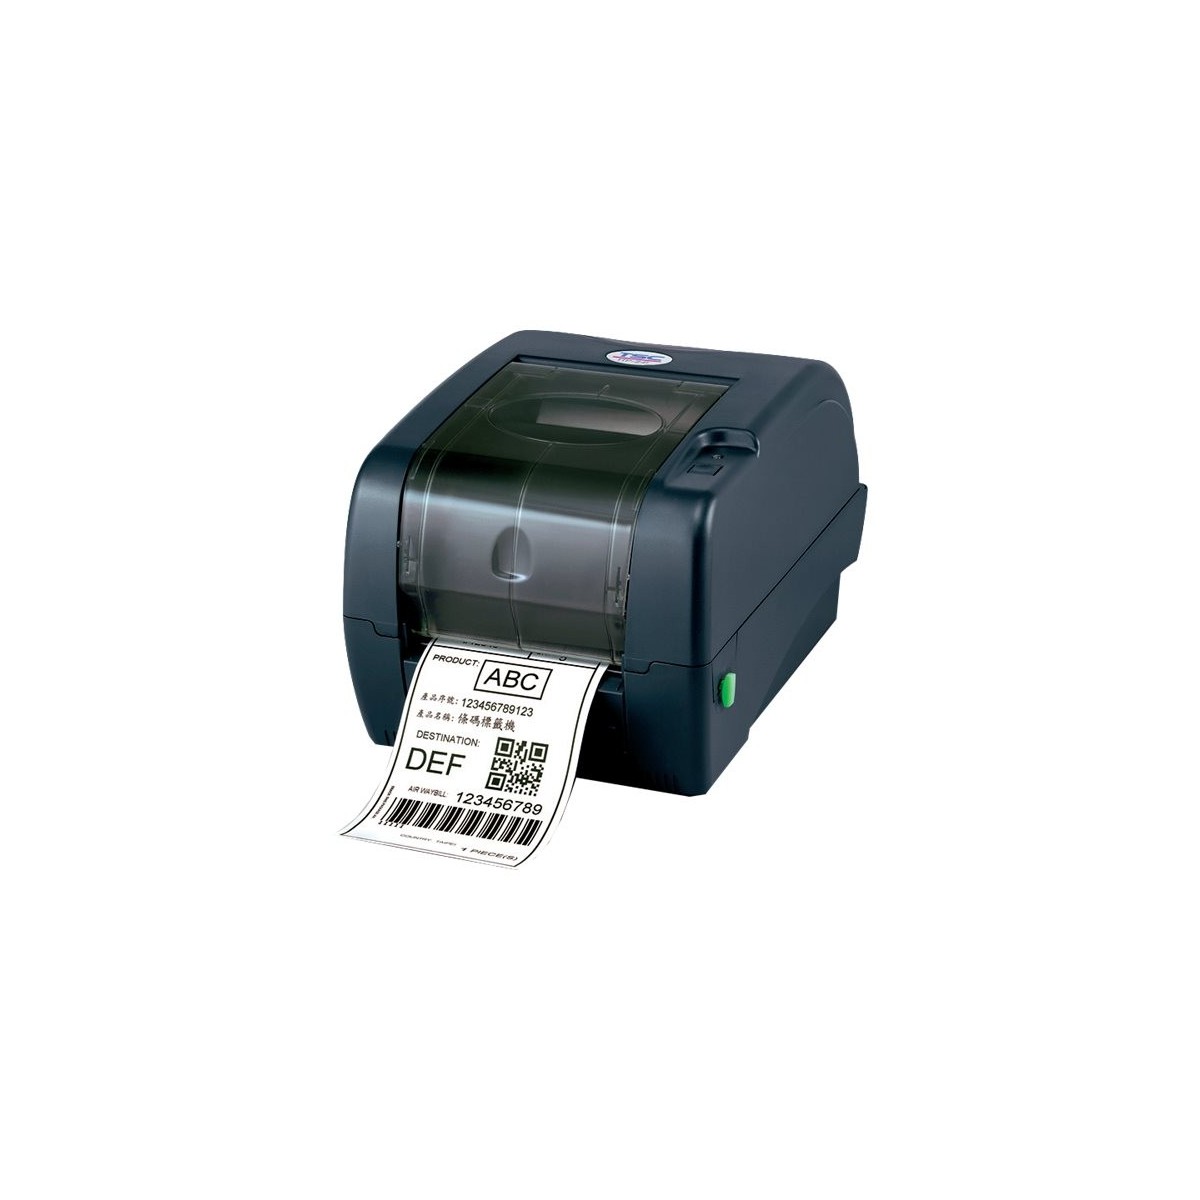 TSC TTP-247 203dpi Multi-IF - Label Printer - Label Printer